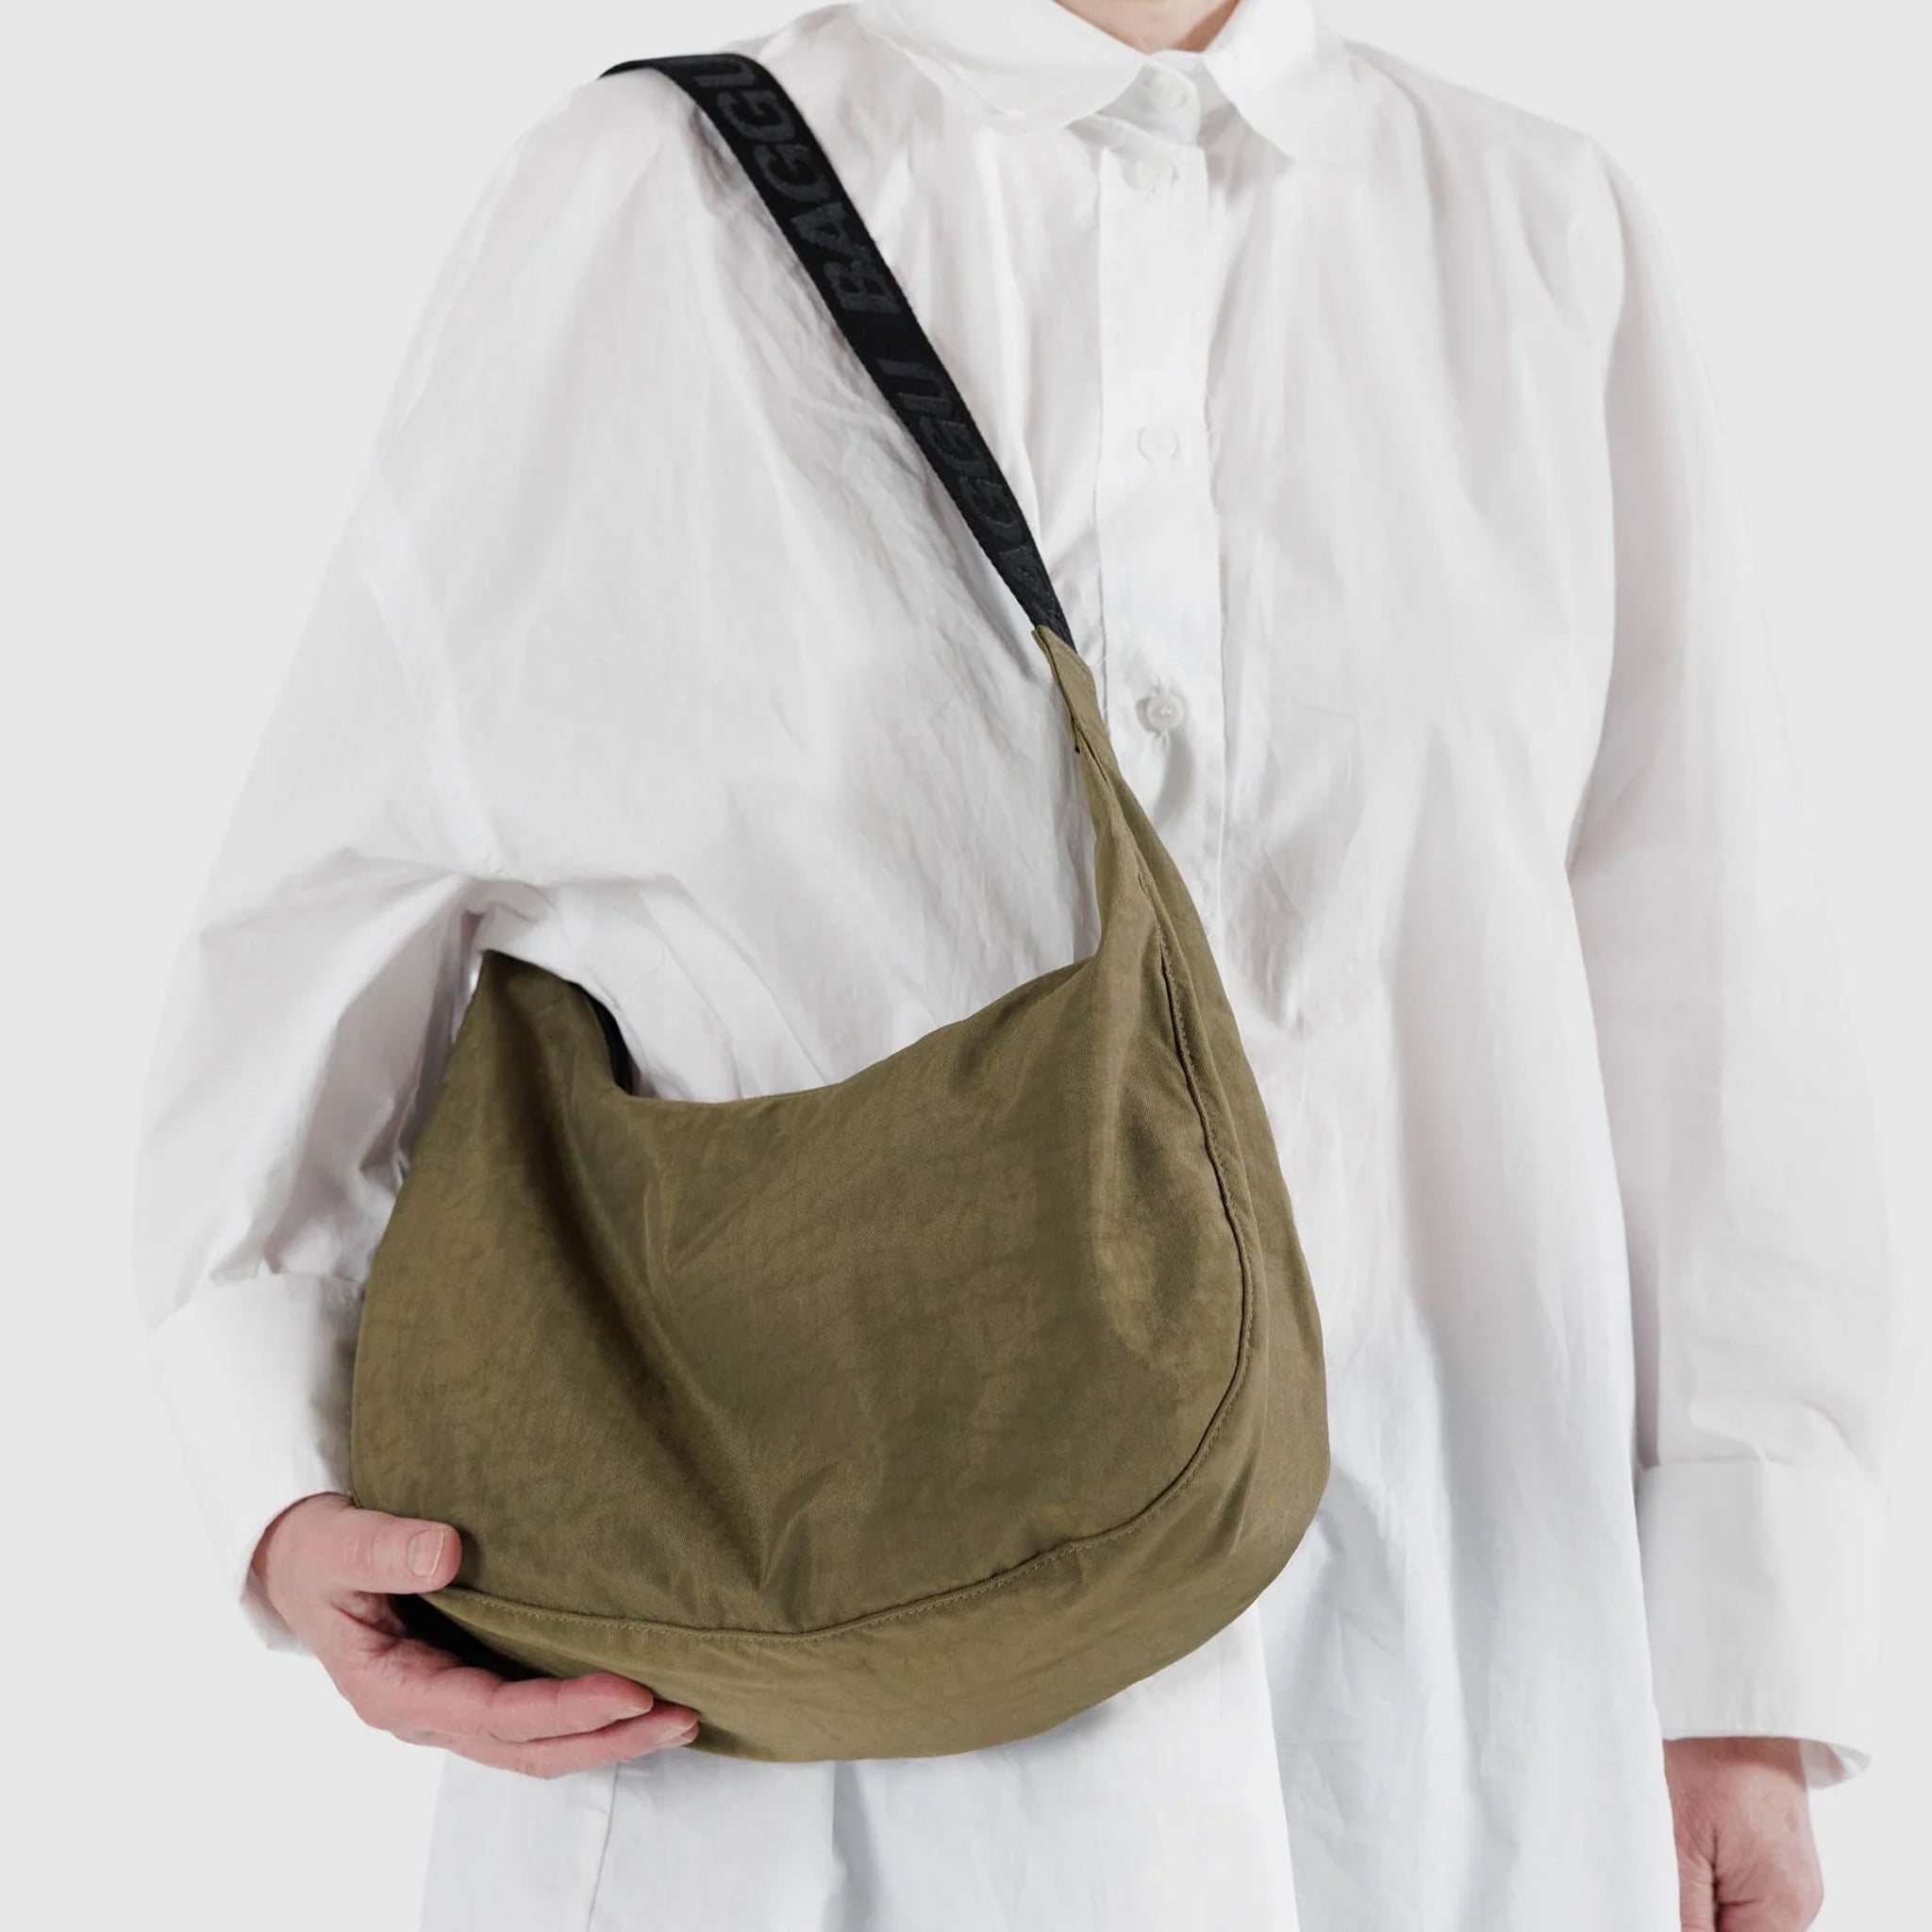 A dark green crescent nylon bag with a black shoulder strap